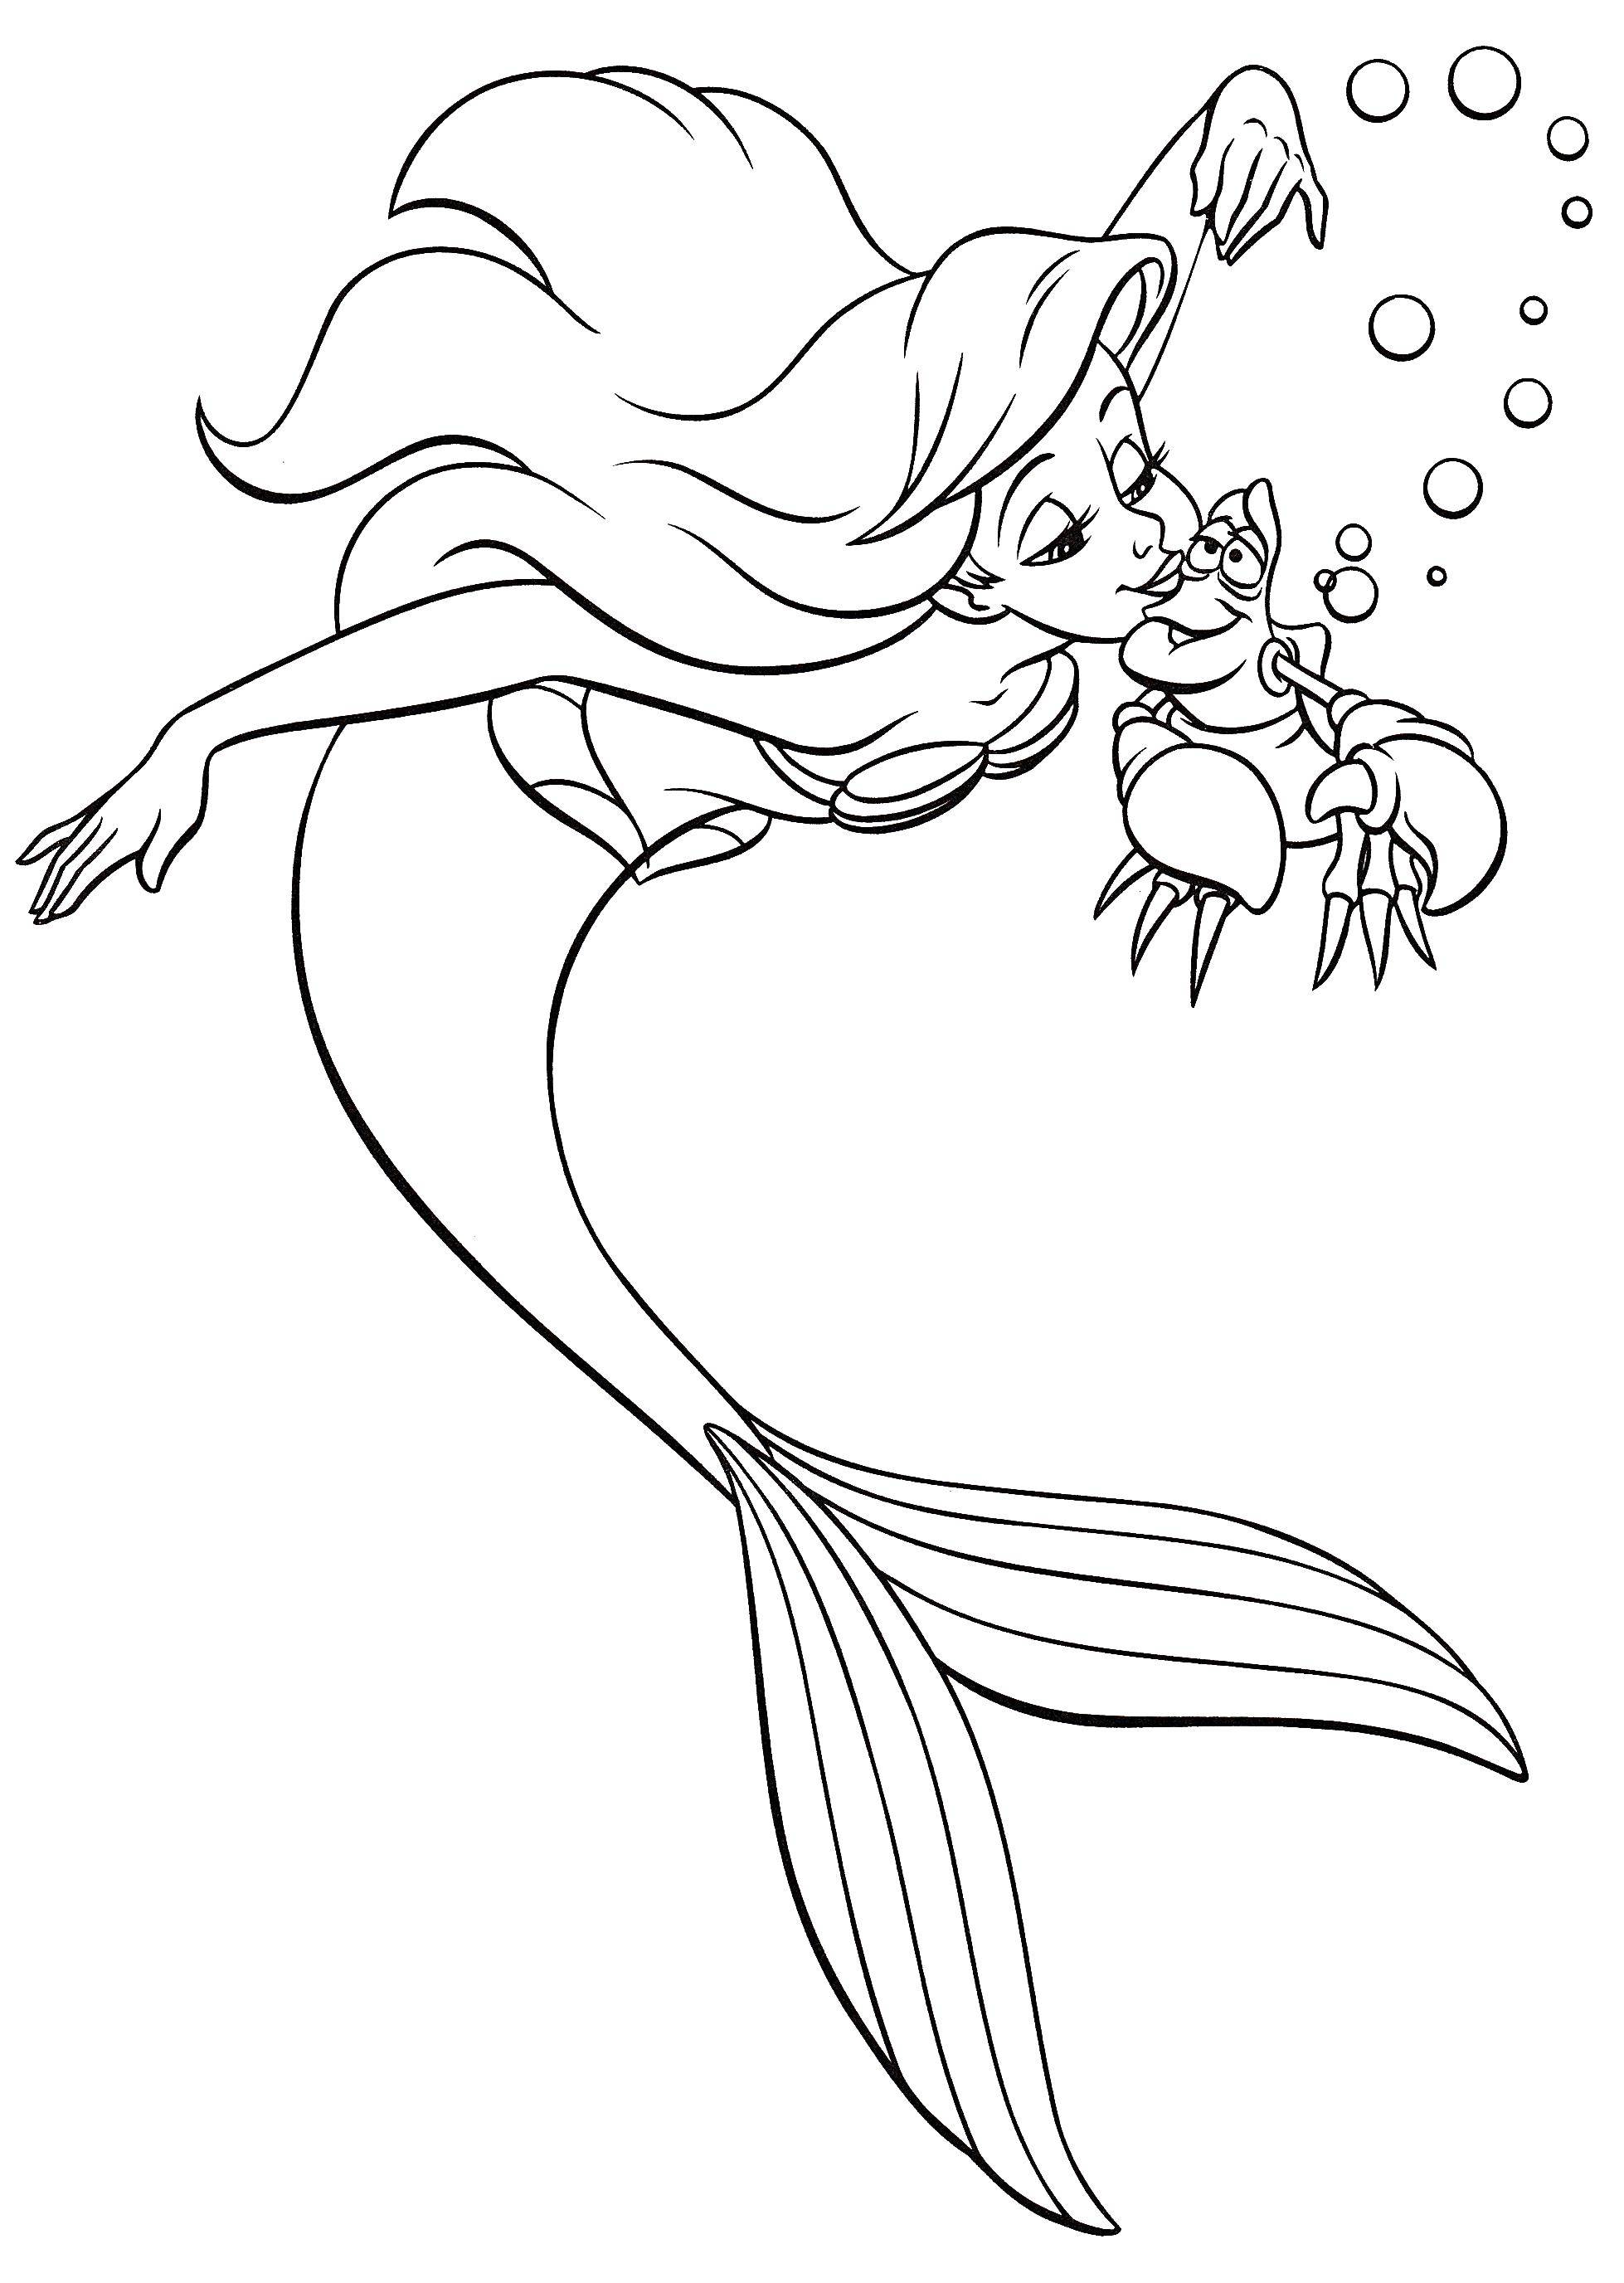 Coloring Ariel kisses Sebastian. Category The little mermaid. Tags:  Ariel, Sebastian.